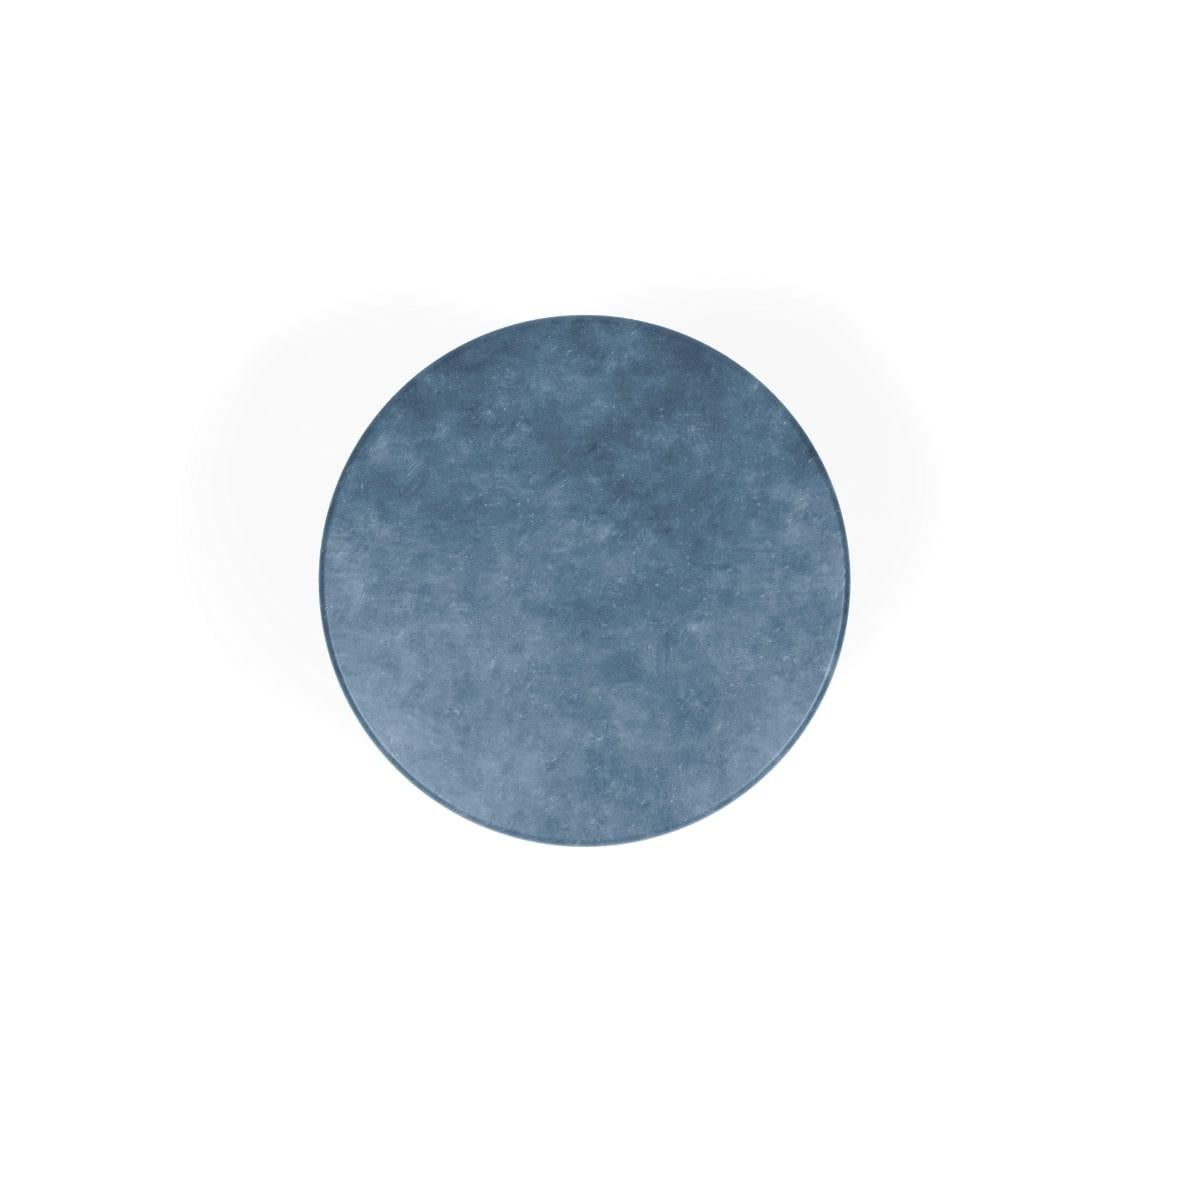 Portuguese Modern Classic Blue Ceramic Atomic Table Stone by Masquespacio For Sale